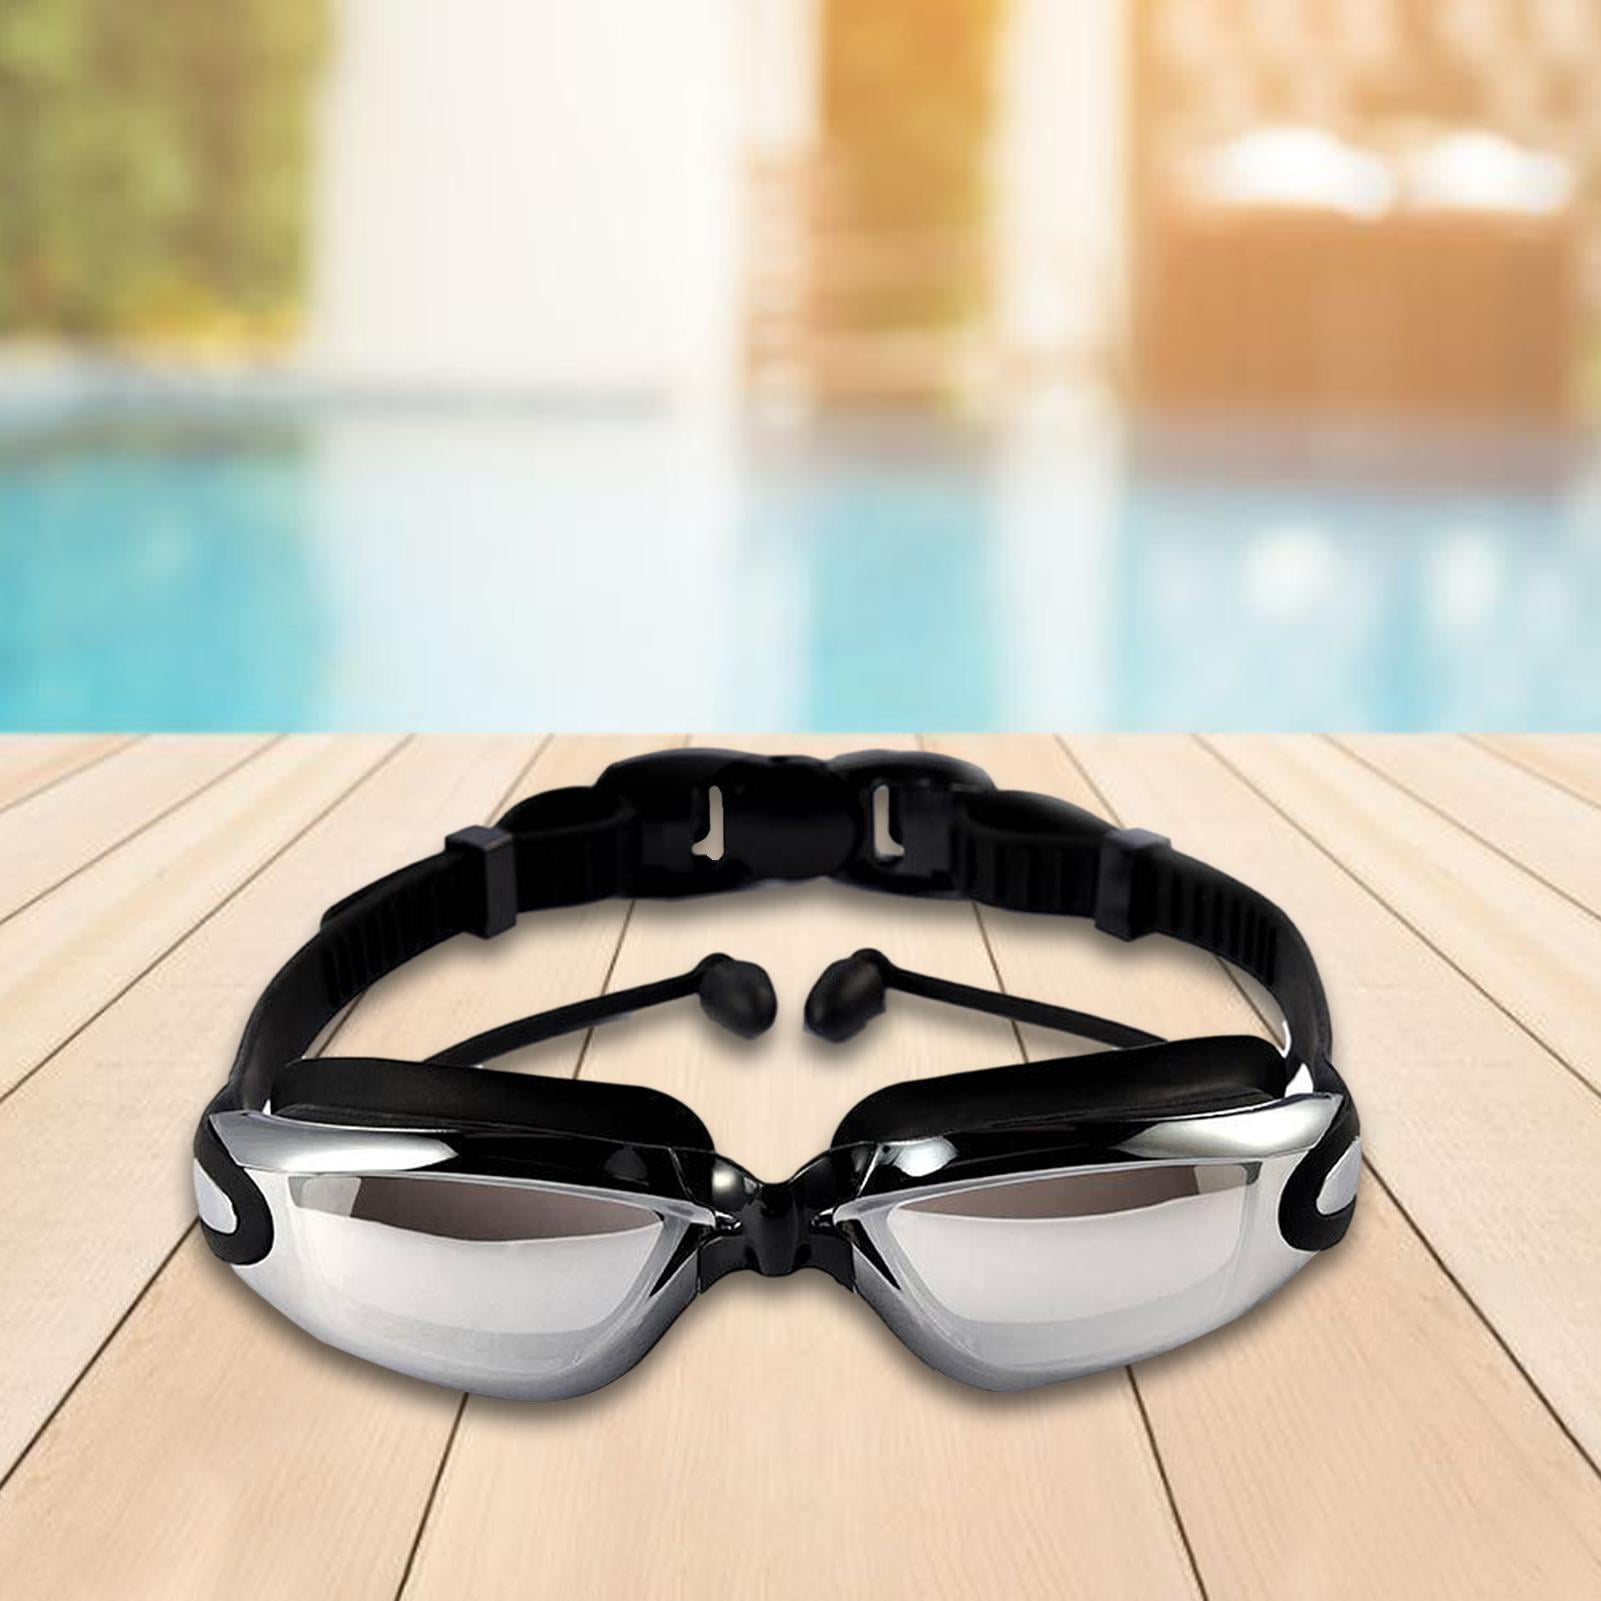 Details about   Mirror Clear Swimming Goggles Anti-UV Anti-Fog Swim Glasses Cap Set Women Men US 